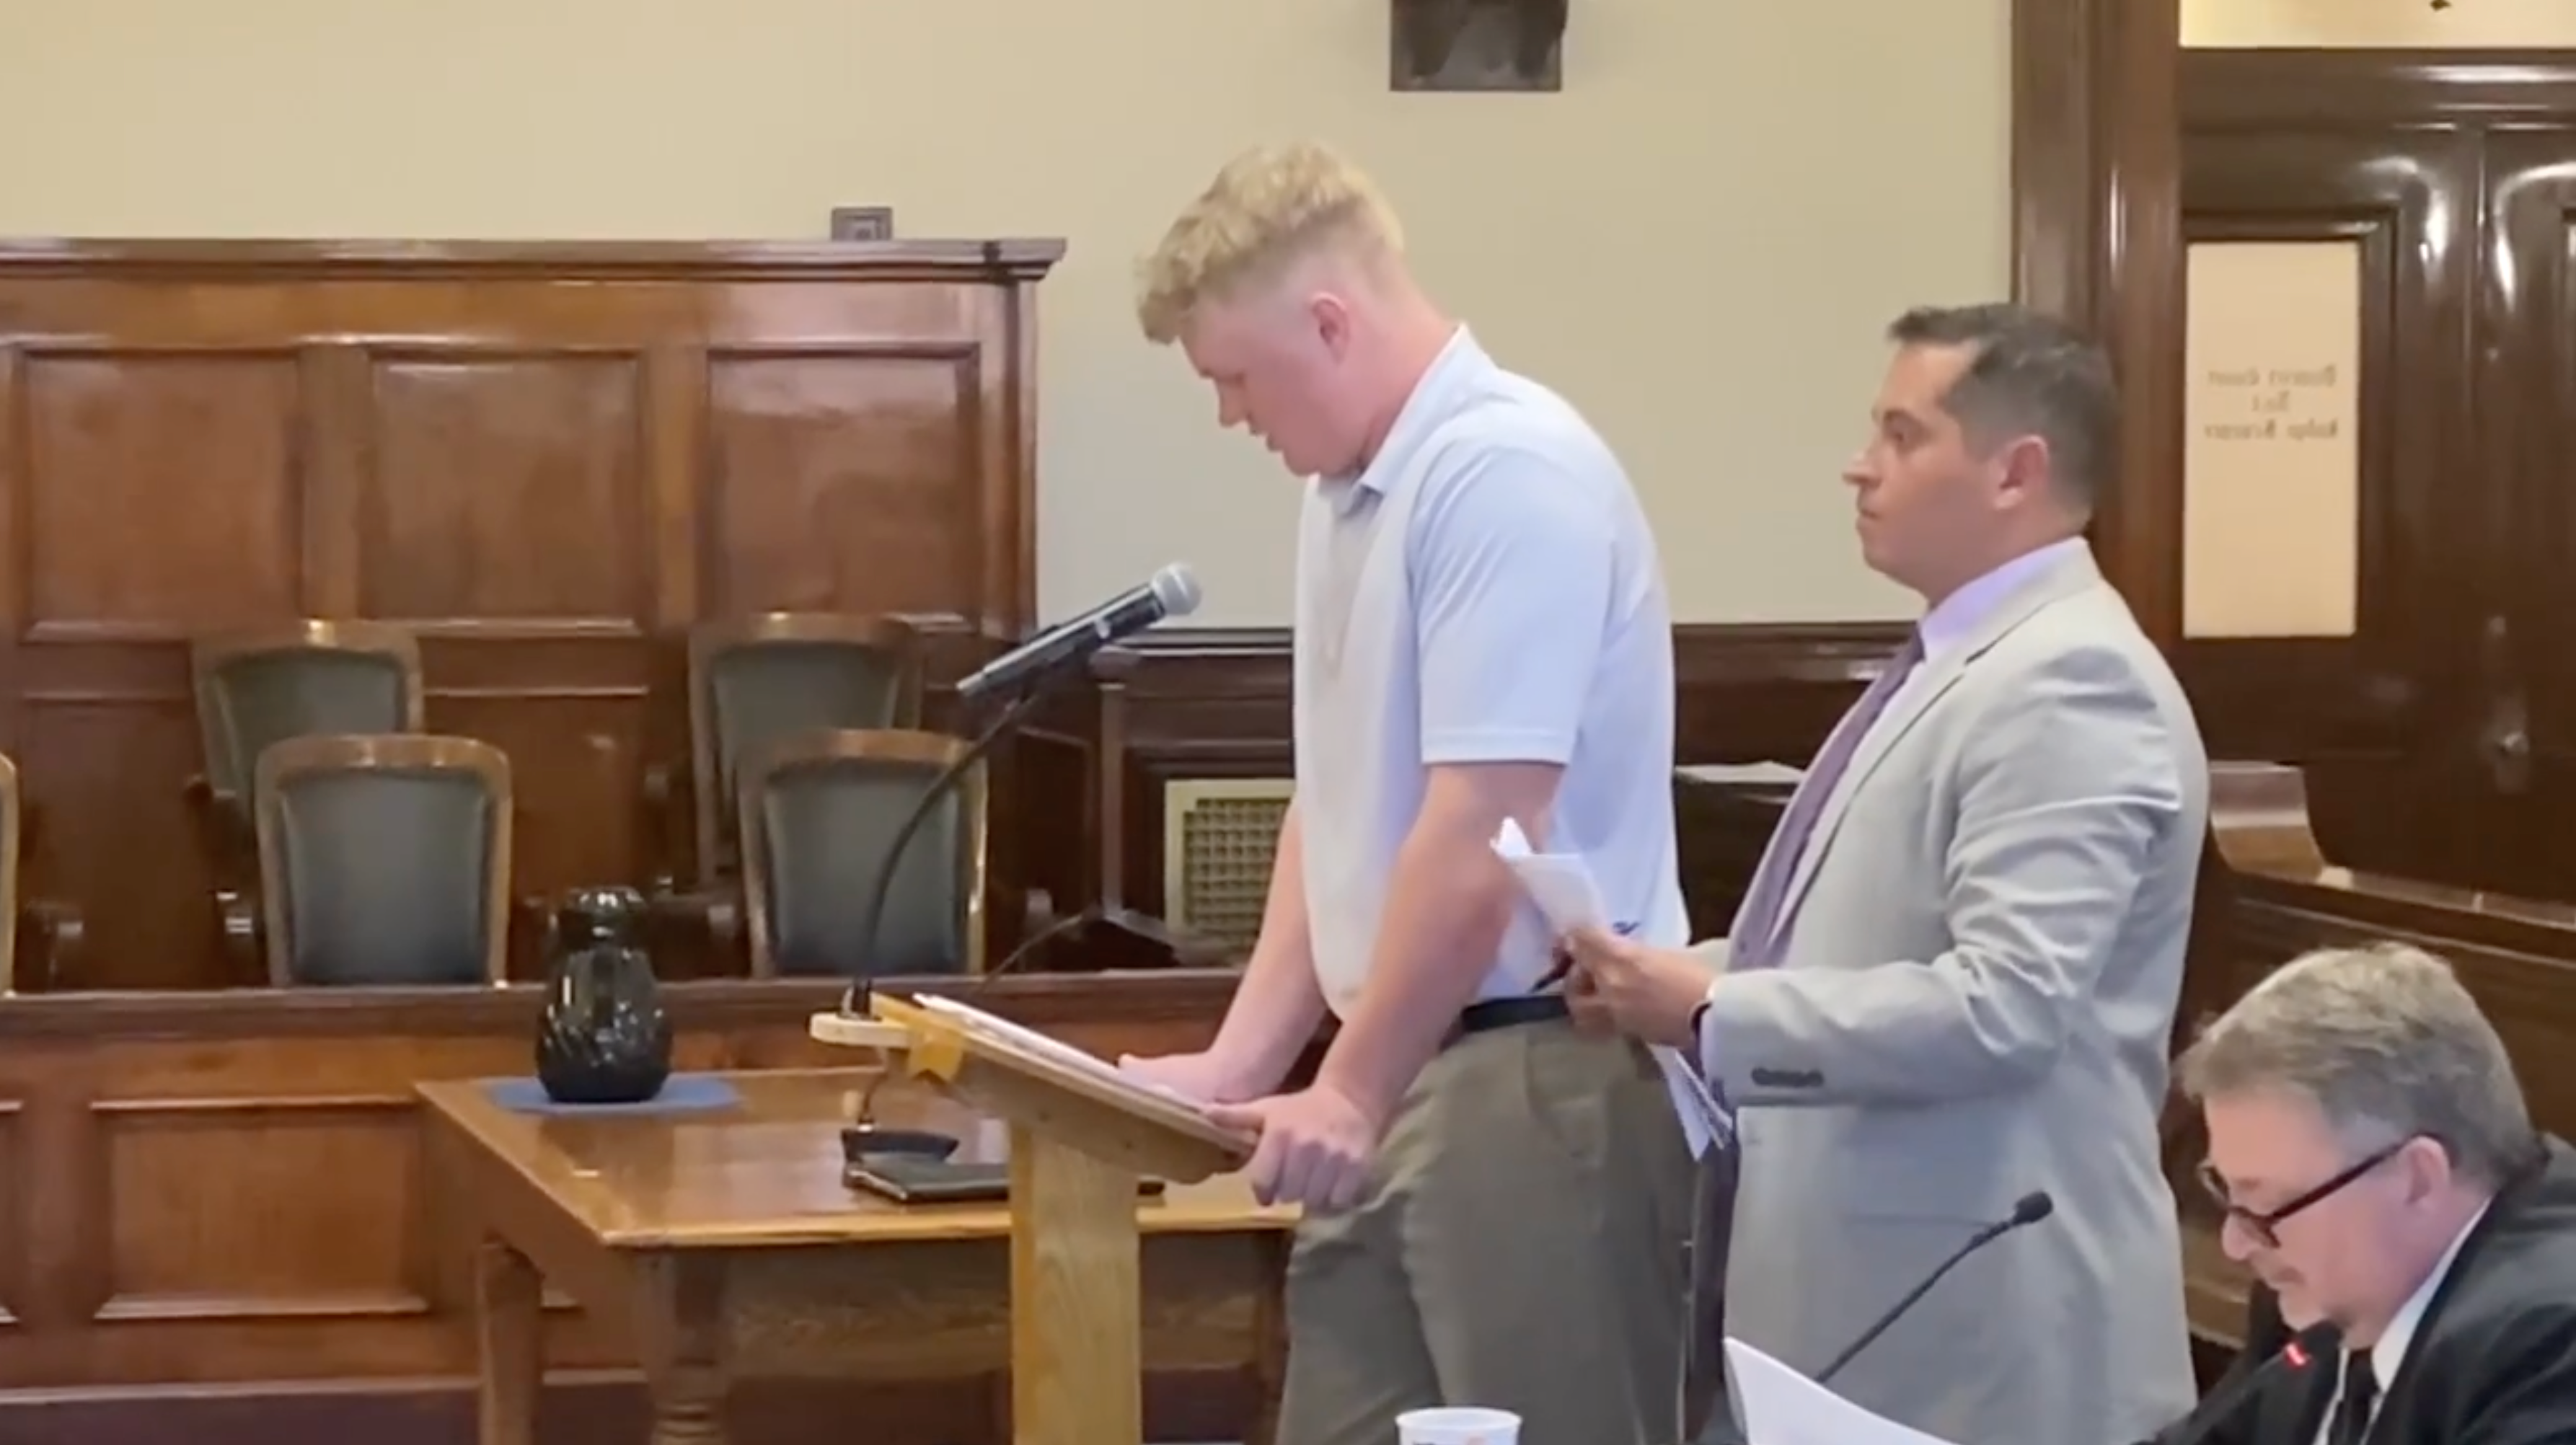 Derek Nygaard, 20, addresses the judge at his sentencing hearing